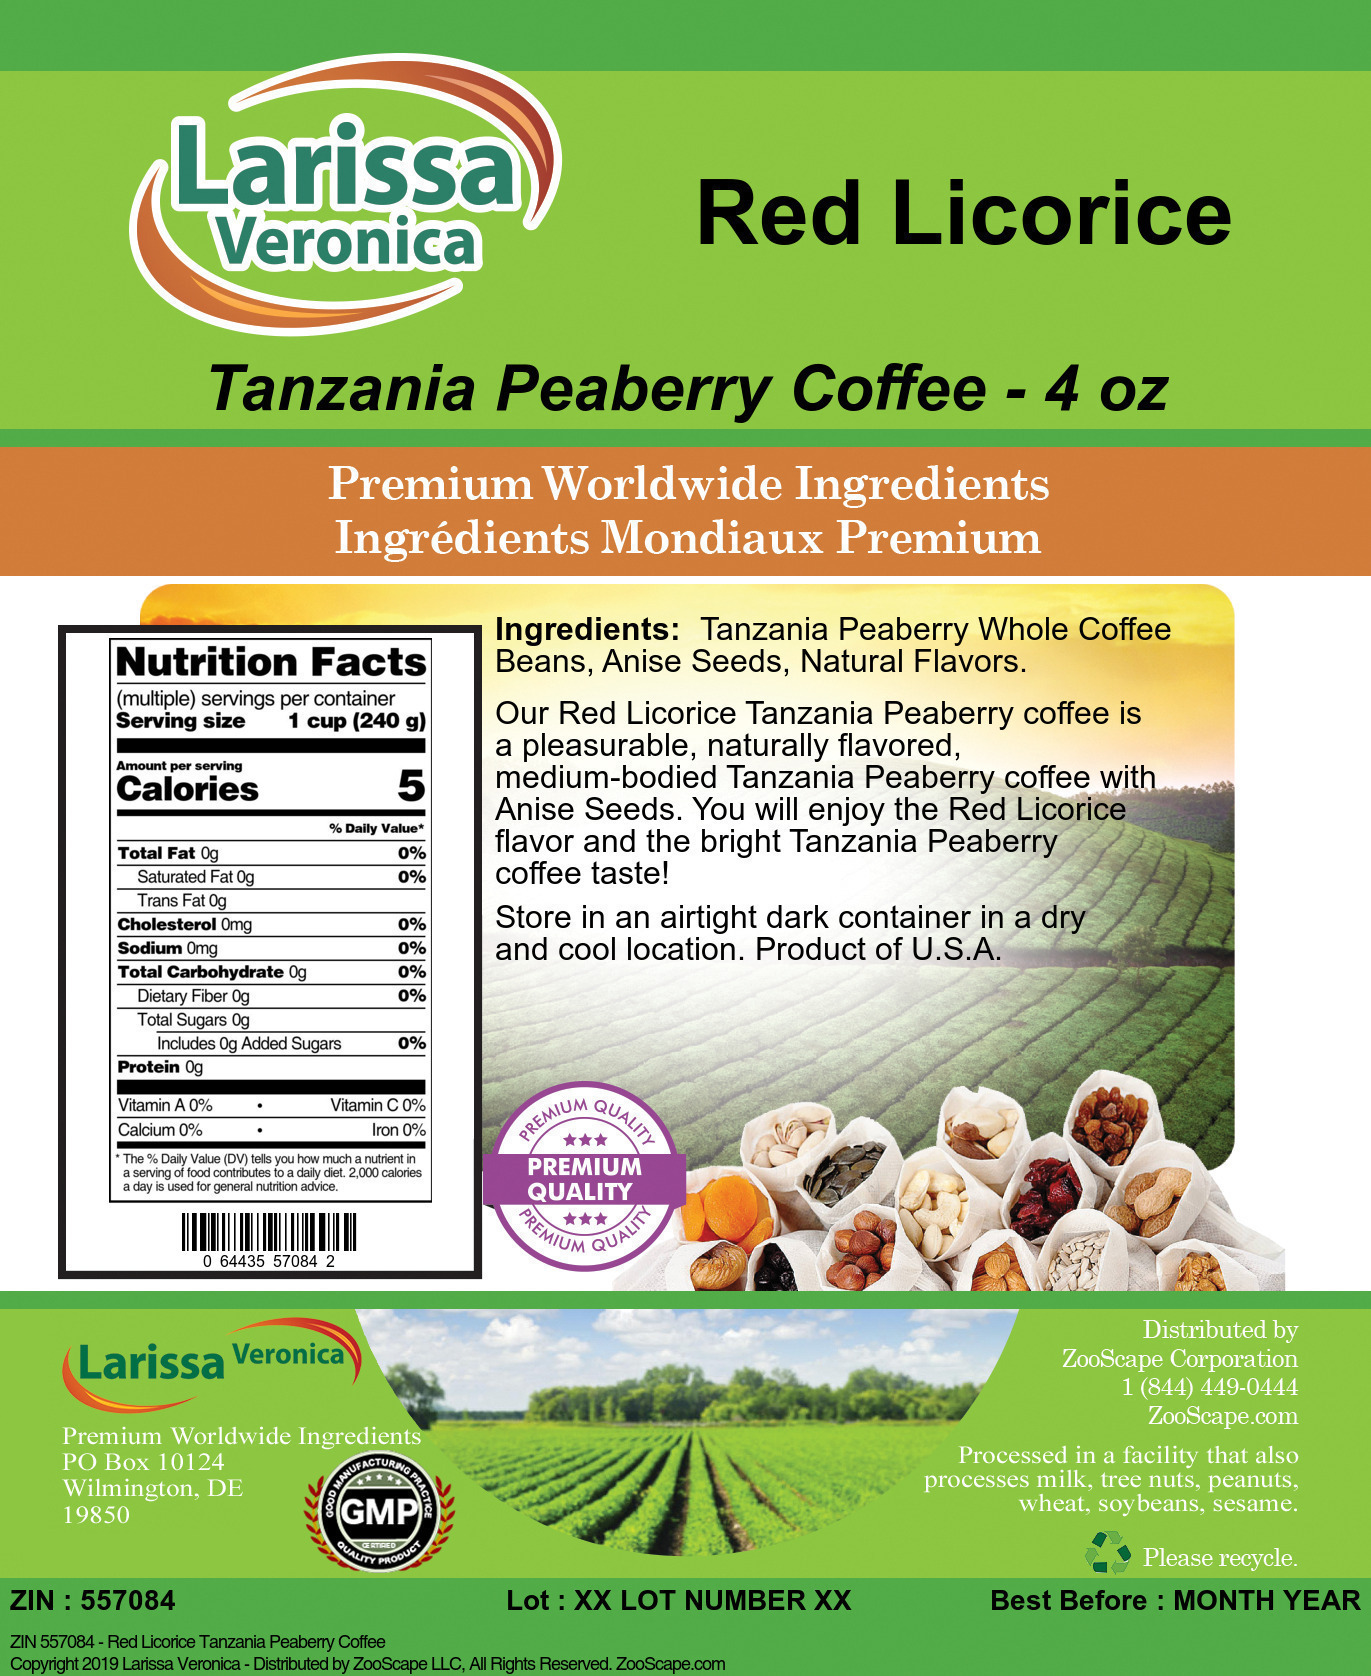 Red Licorice Tanzania Peaberry Coffee - Label